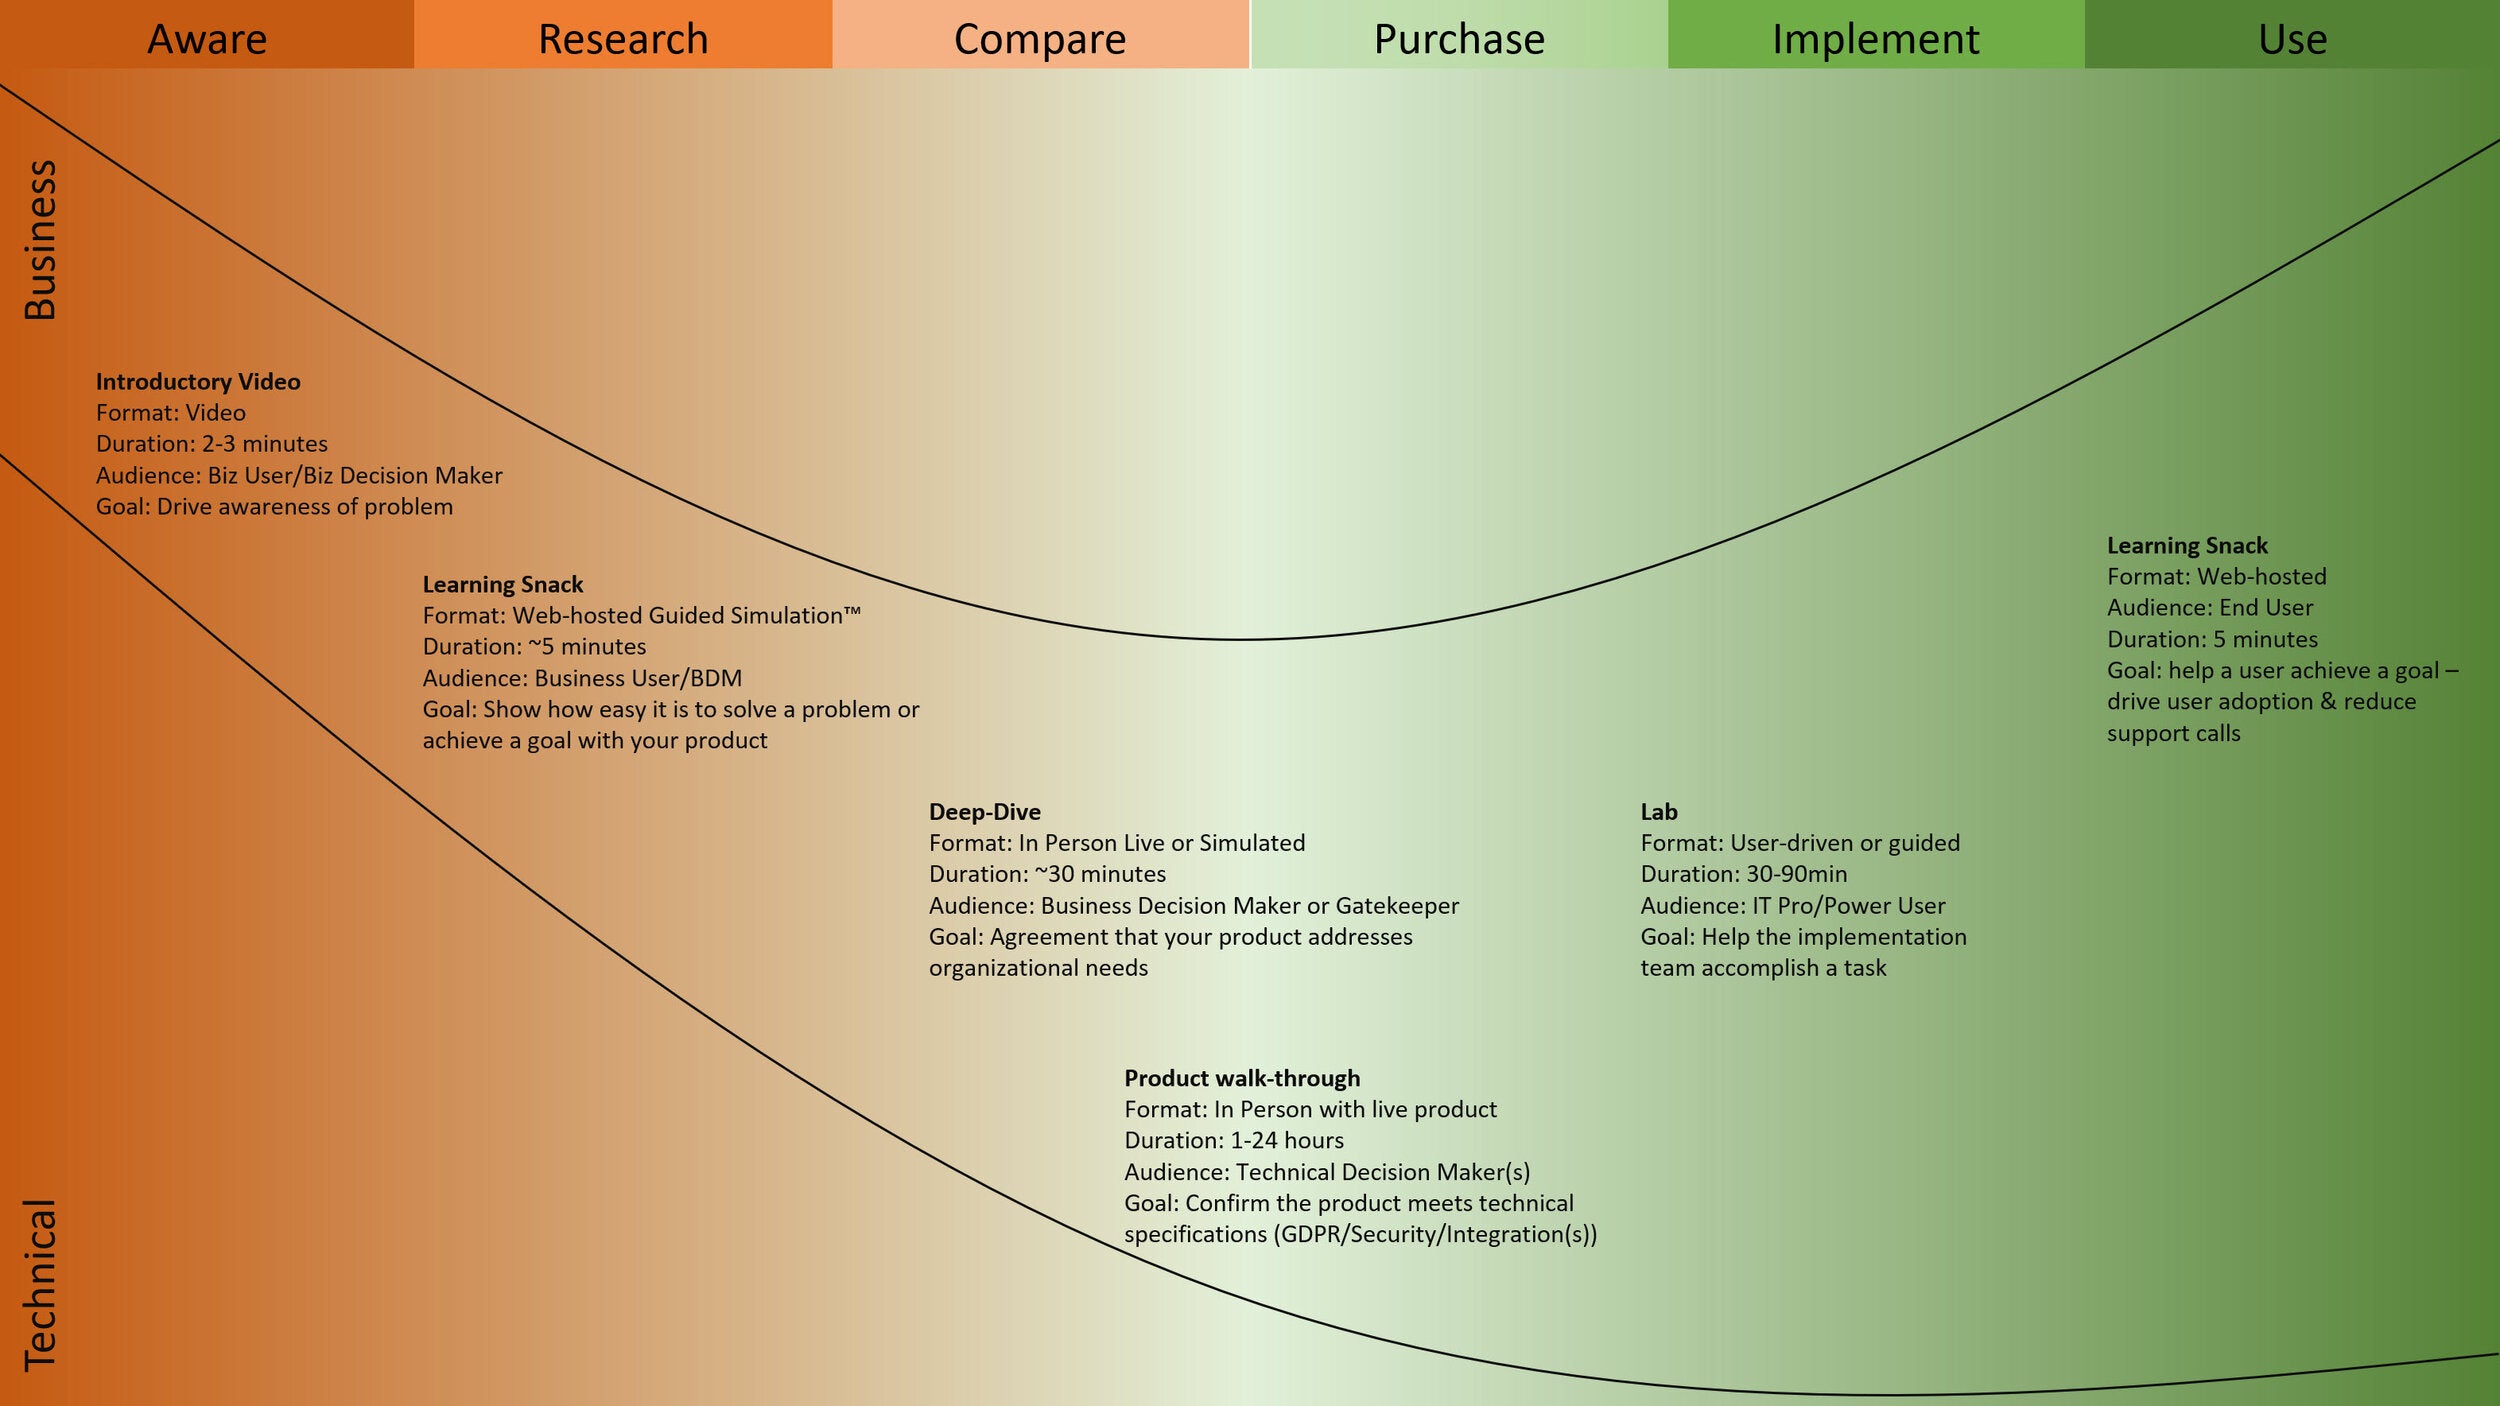 Figure 1 - The types of demos we’ve identified across a buyer’s journey